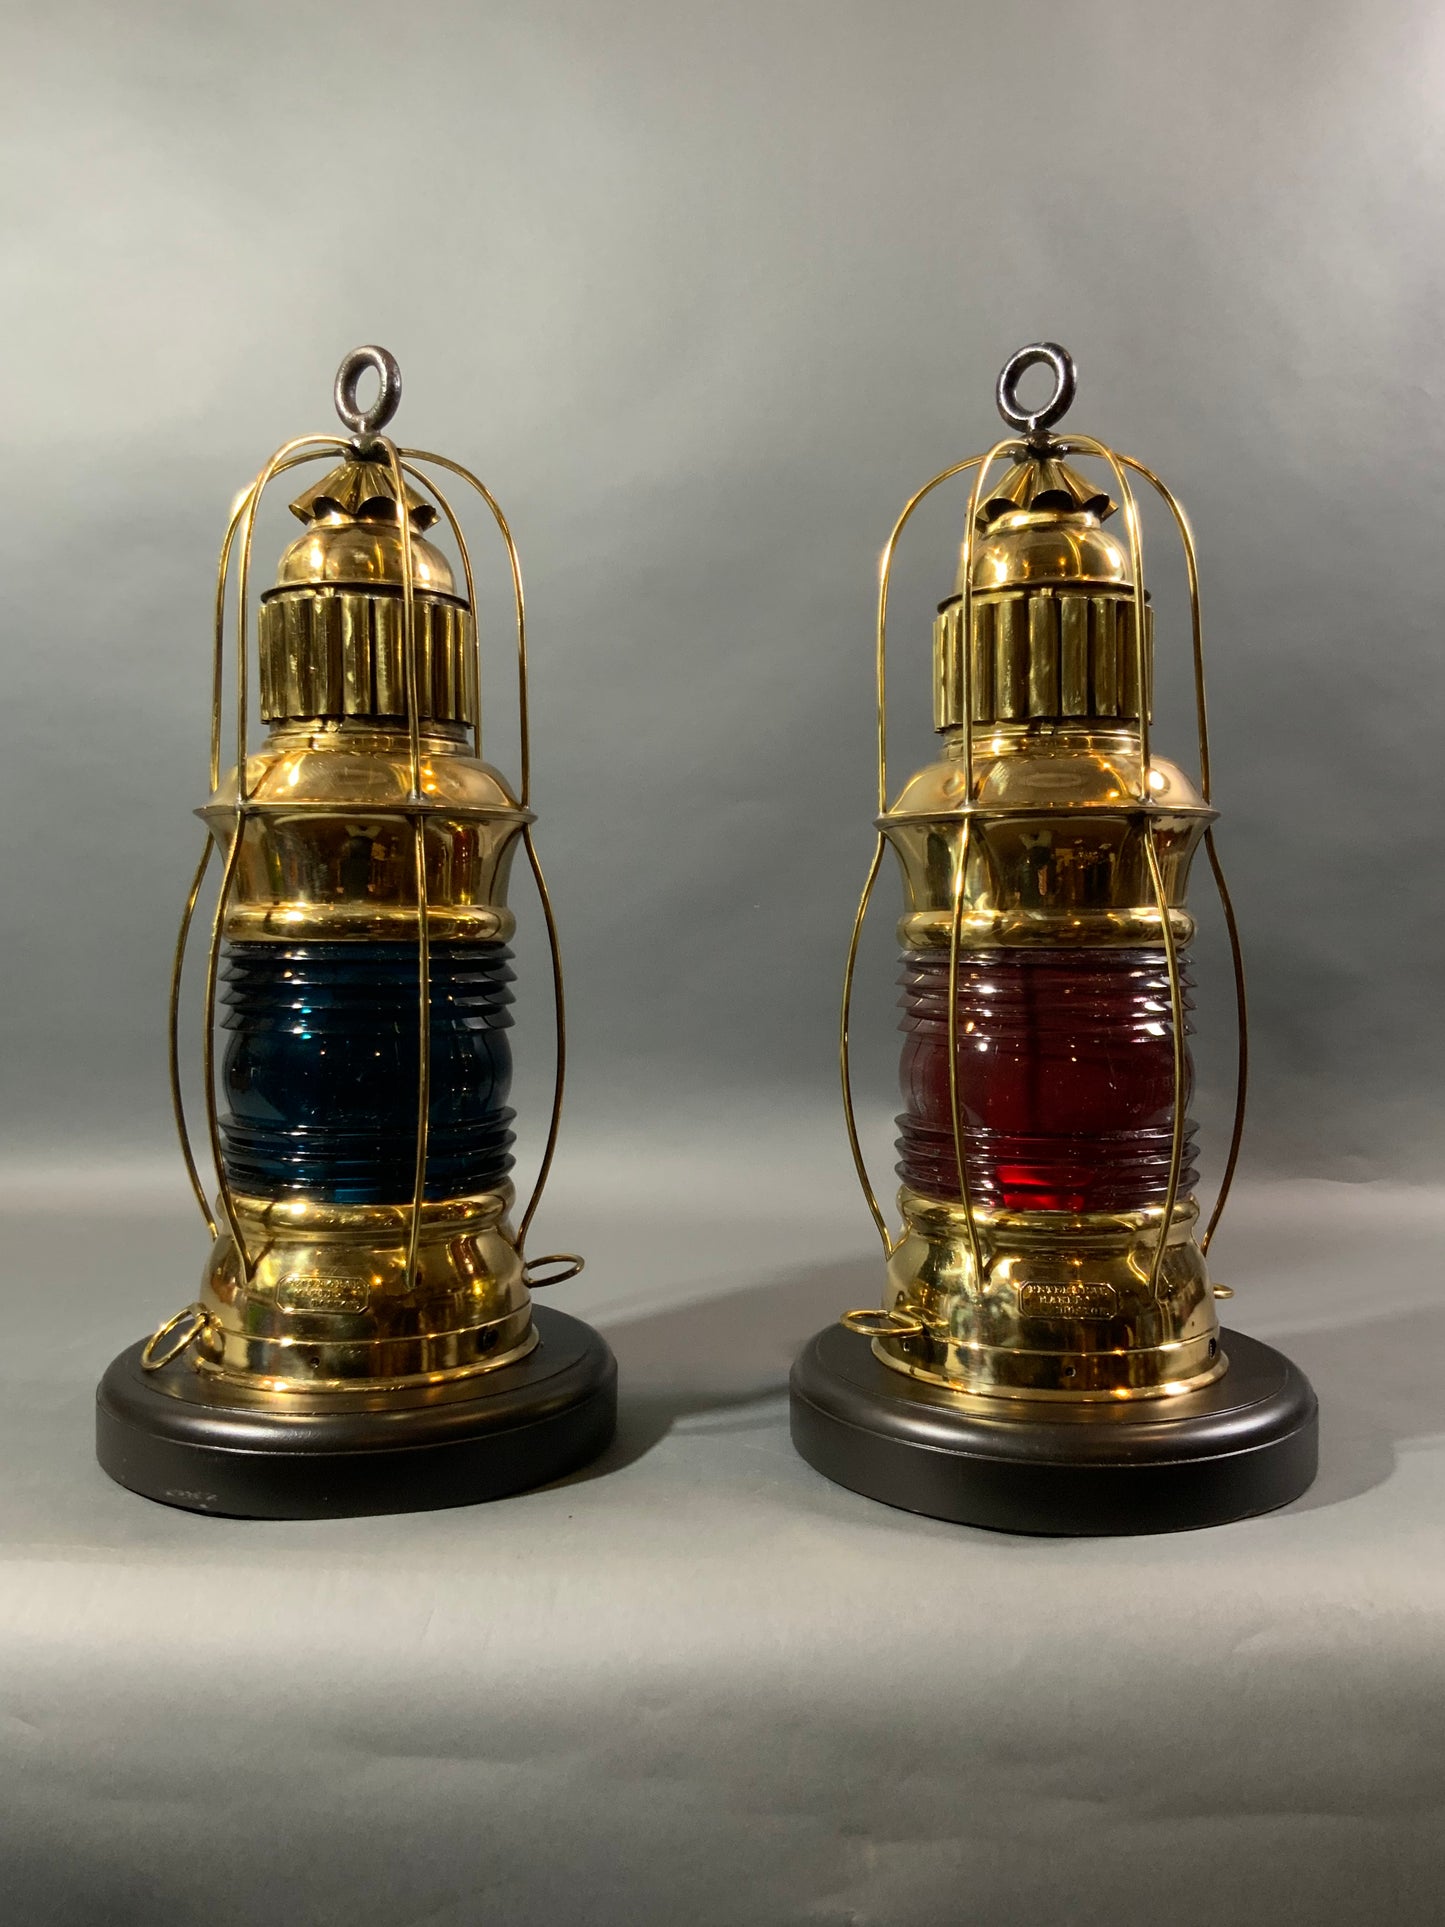 Outstanding Pair of Marine Lanterns by Peter Gray of Boston - Lannan Gallery